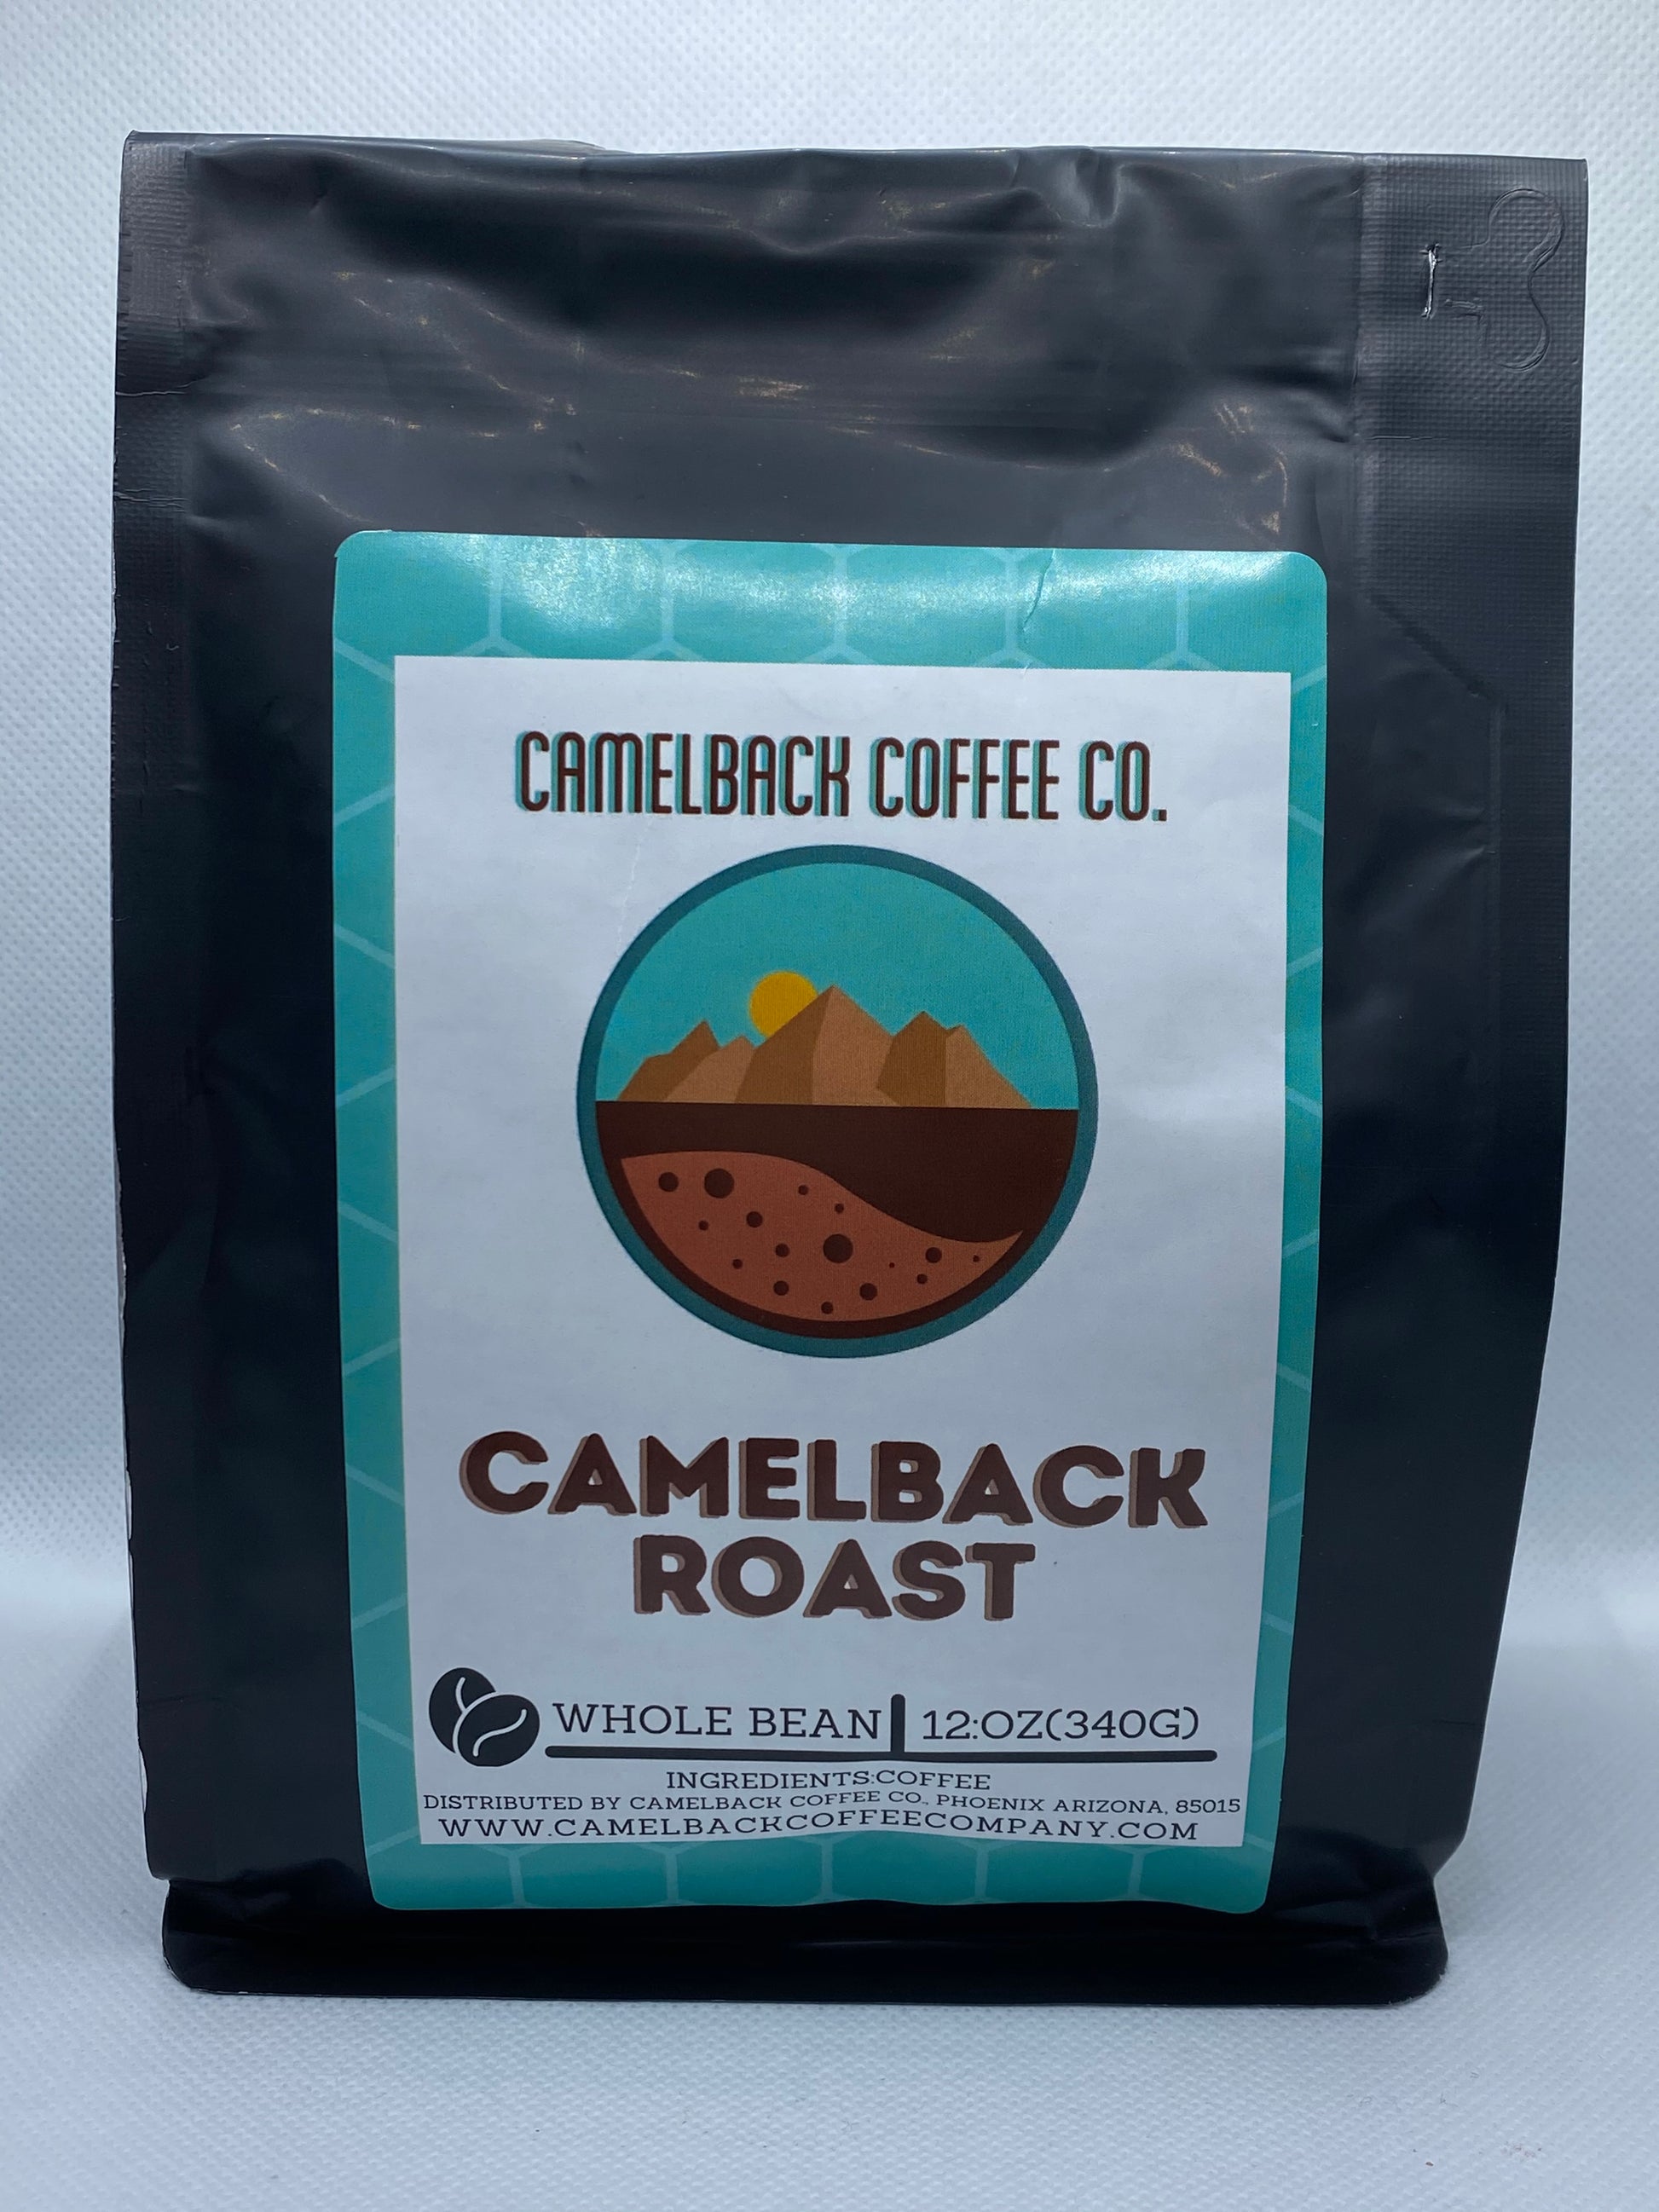 Camelback Roast - Camelback Coffee